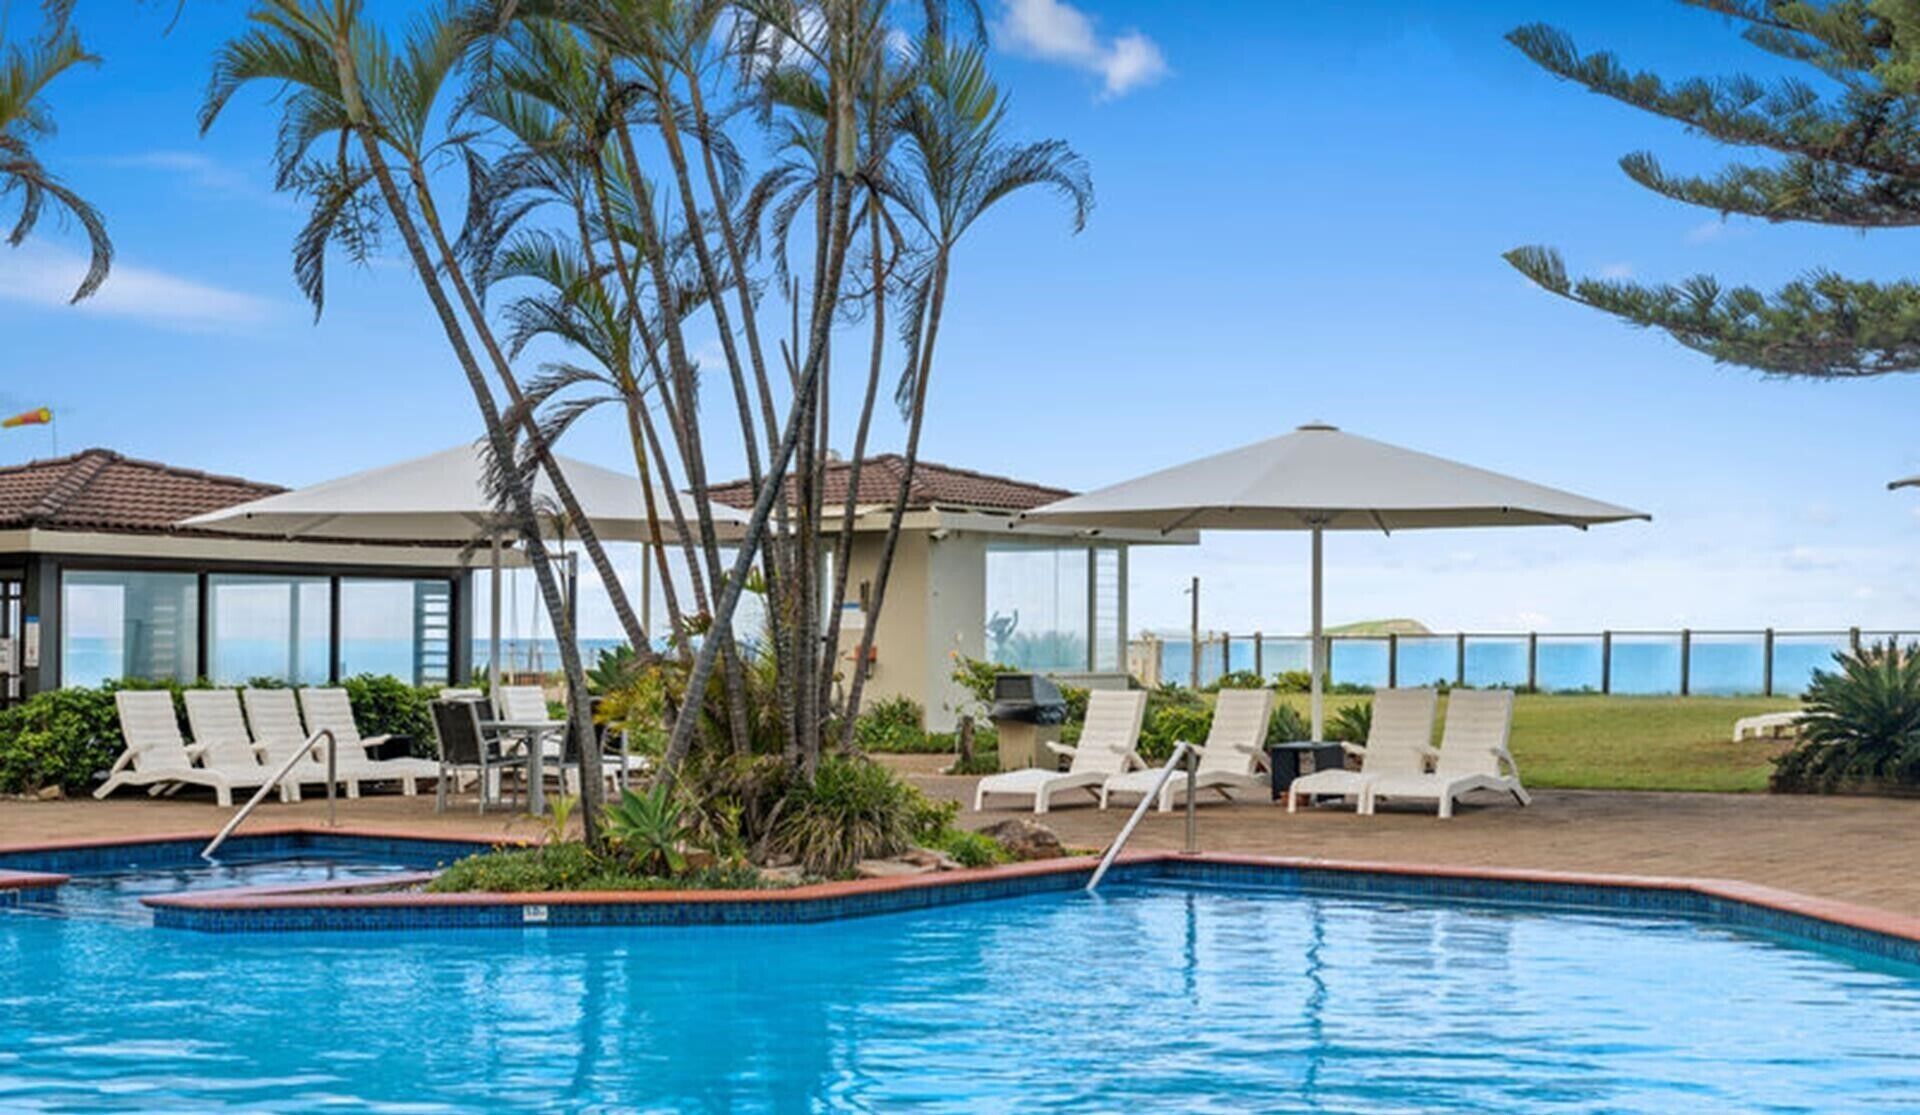 Nautilus Resort - Executive Apartment With the Beach on Your Doorstep